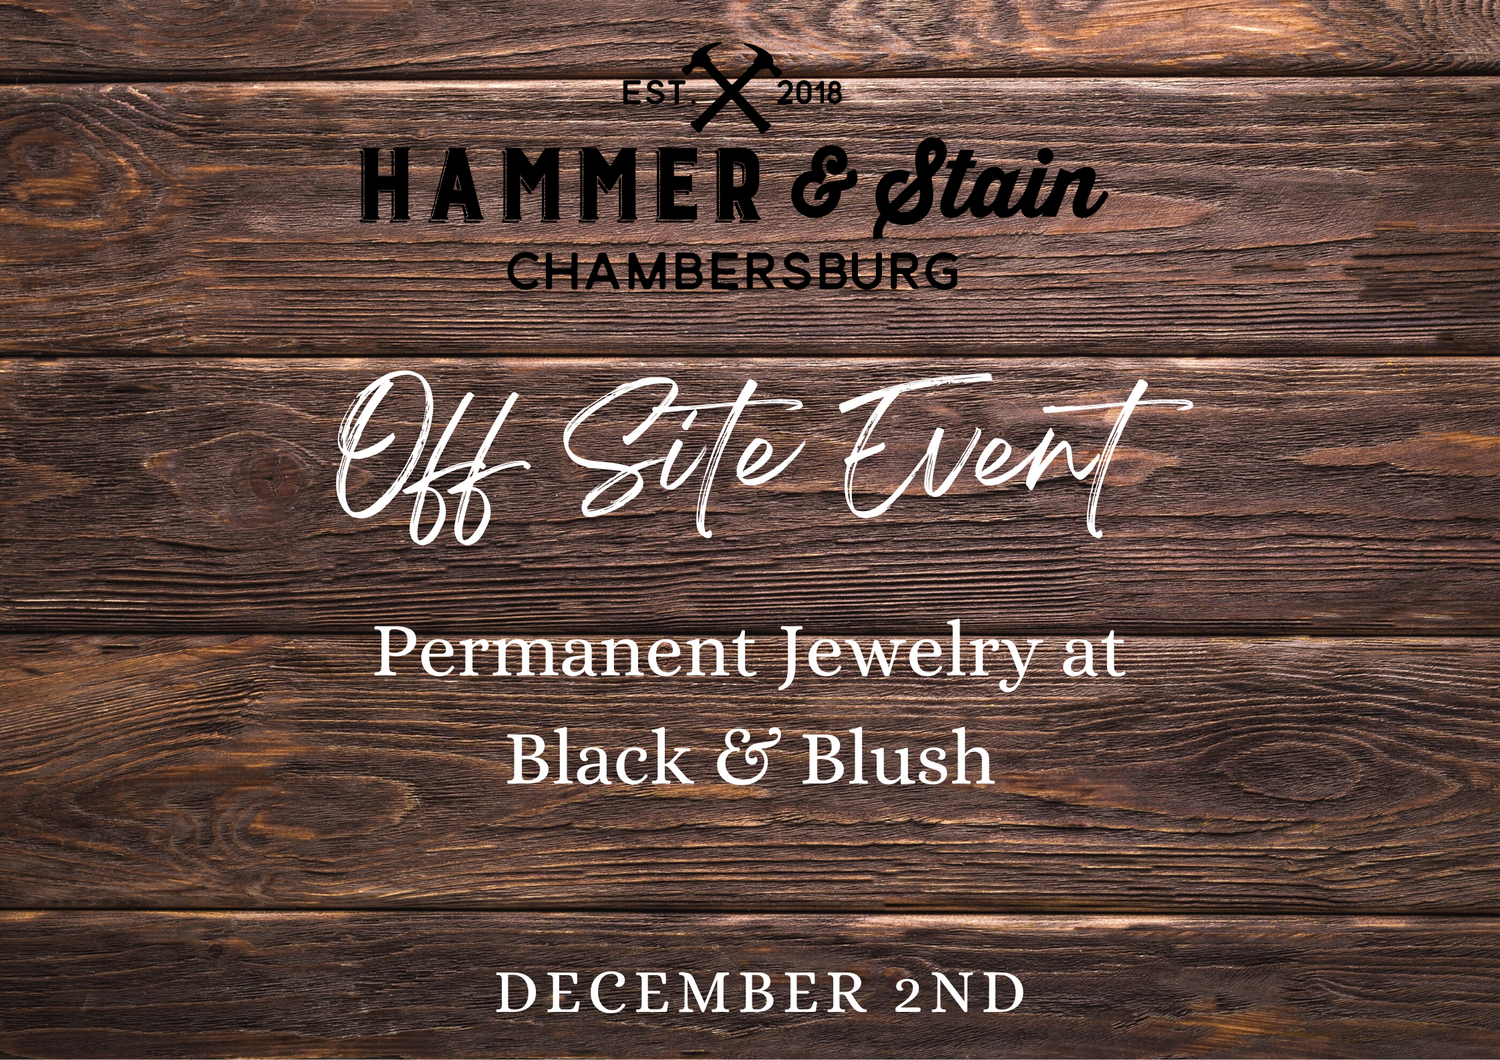 12/02/23 Black & Blush Permanent Jewelry Event 2p-5p